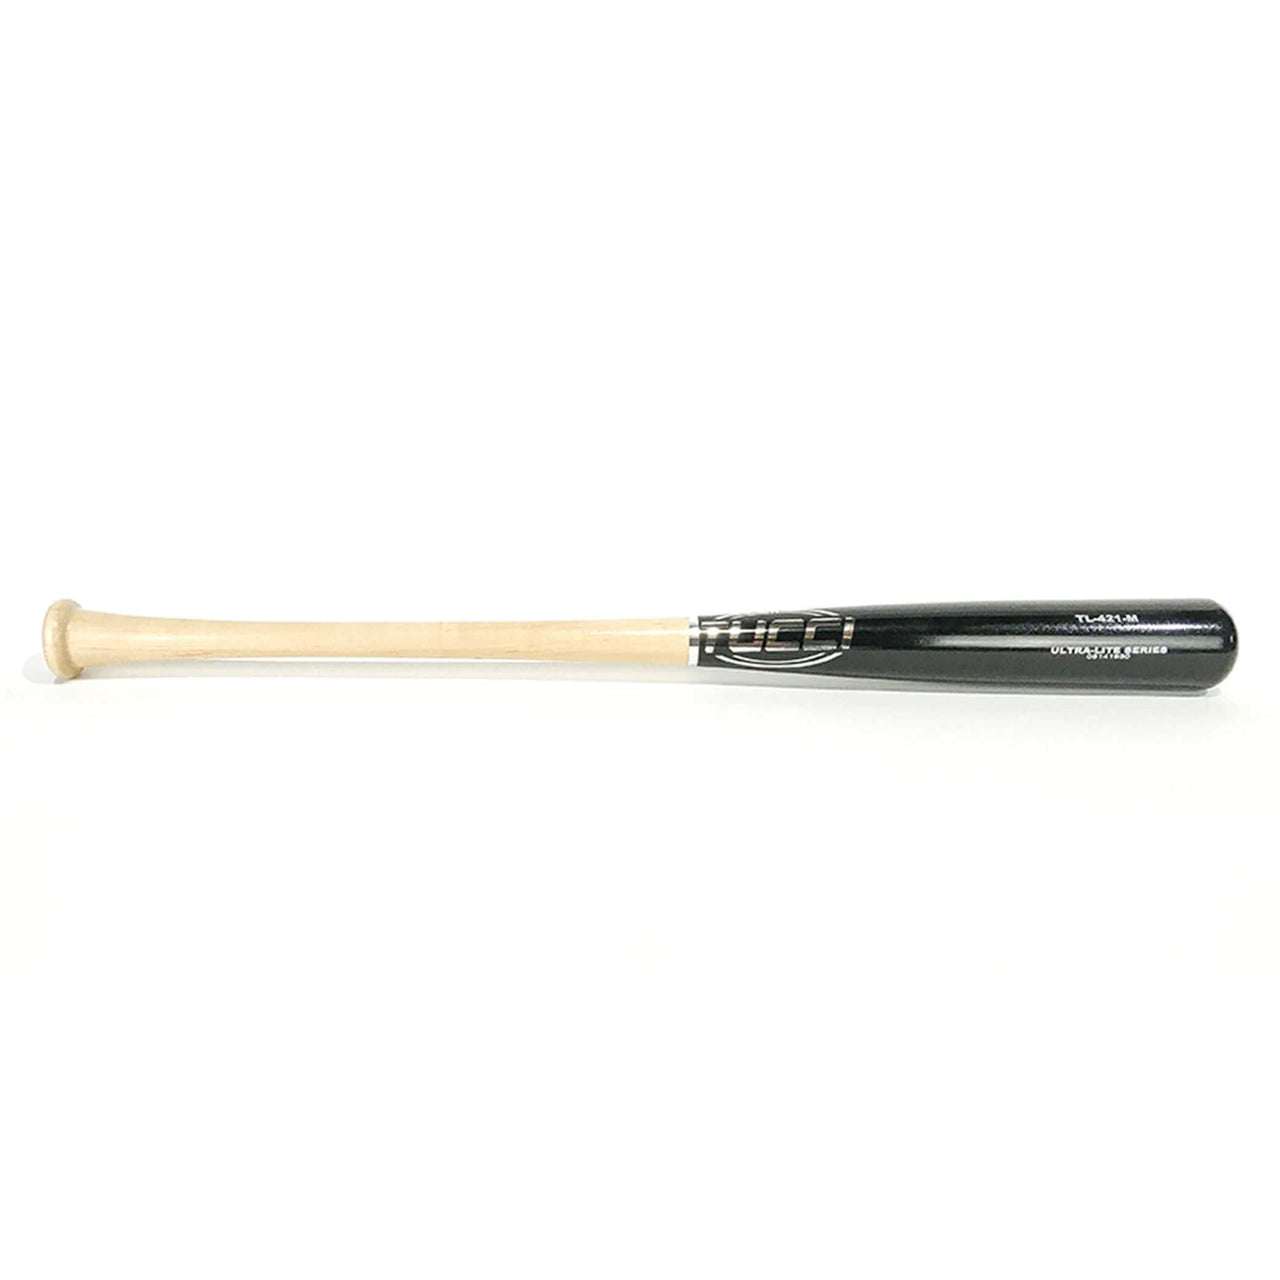 Tucci Lumber Bats Playing Bats Natural | Black | Silver / 30" / (-6) Tucci Lumber 421-M Wood Baseball Bat | Maple